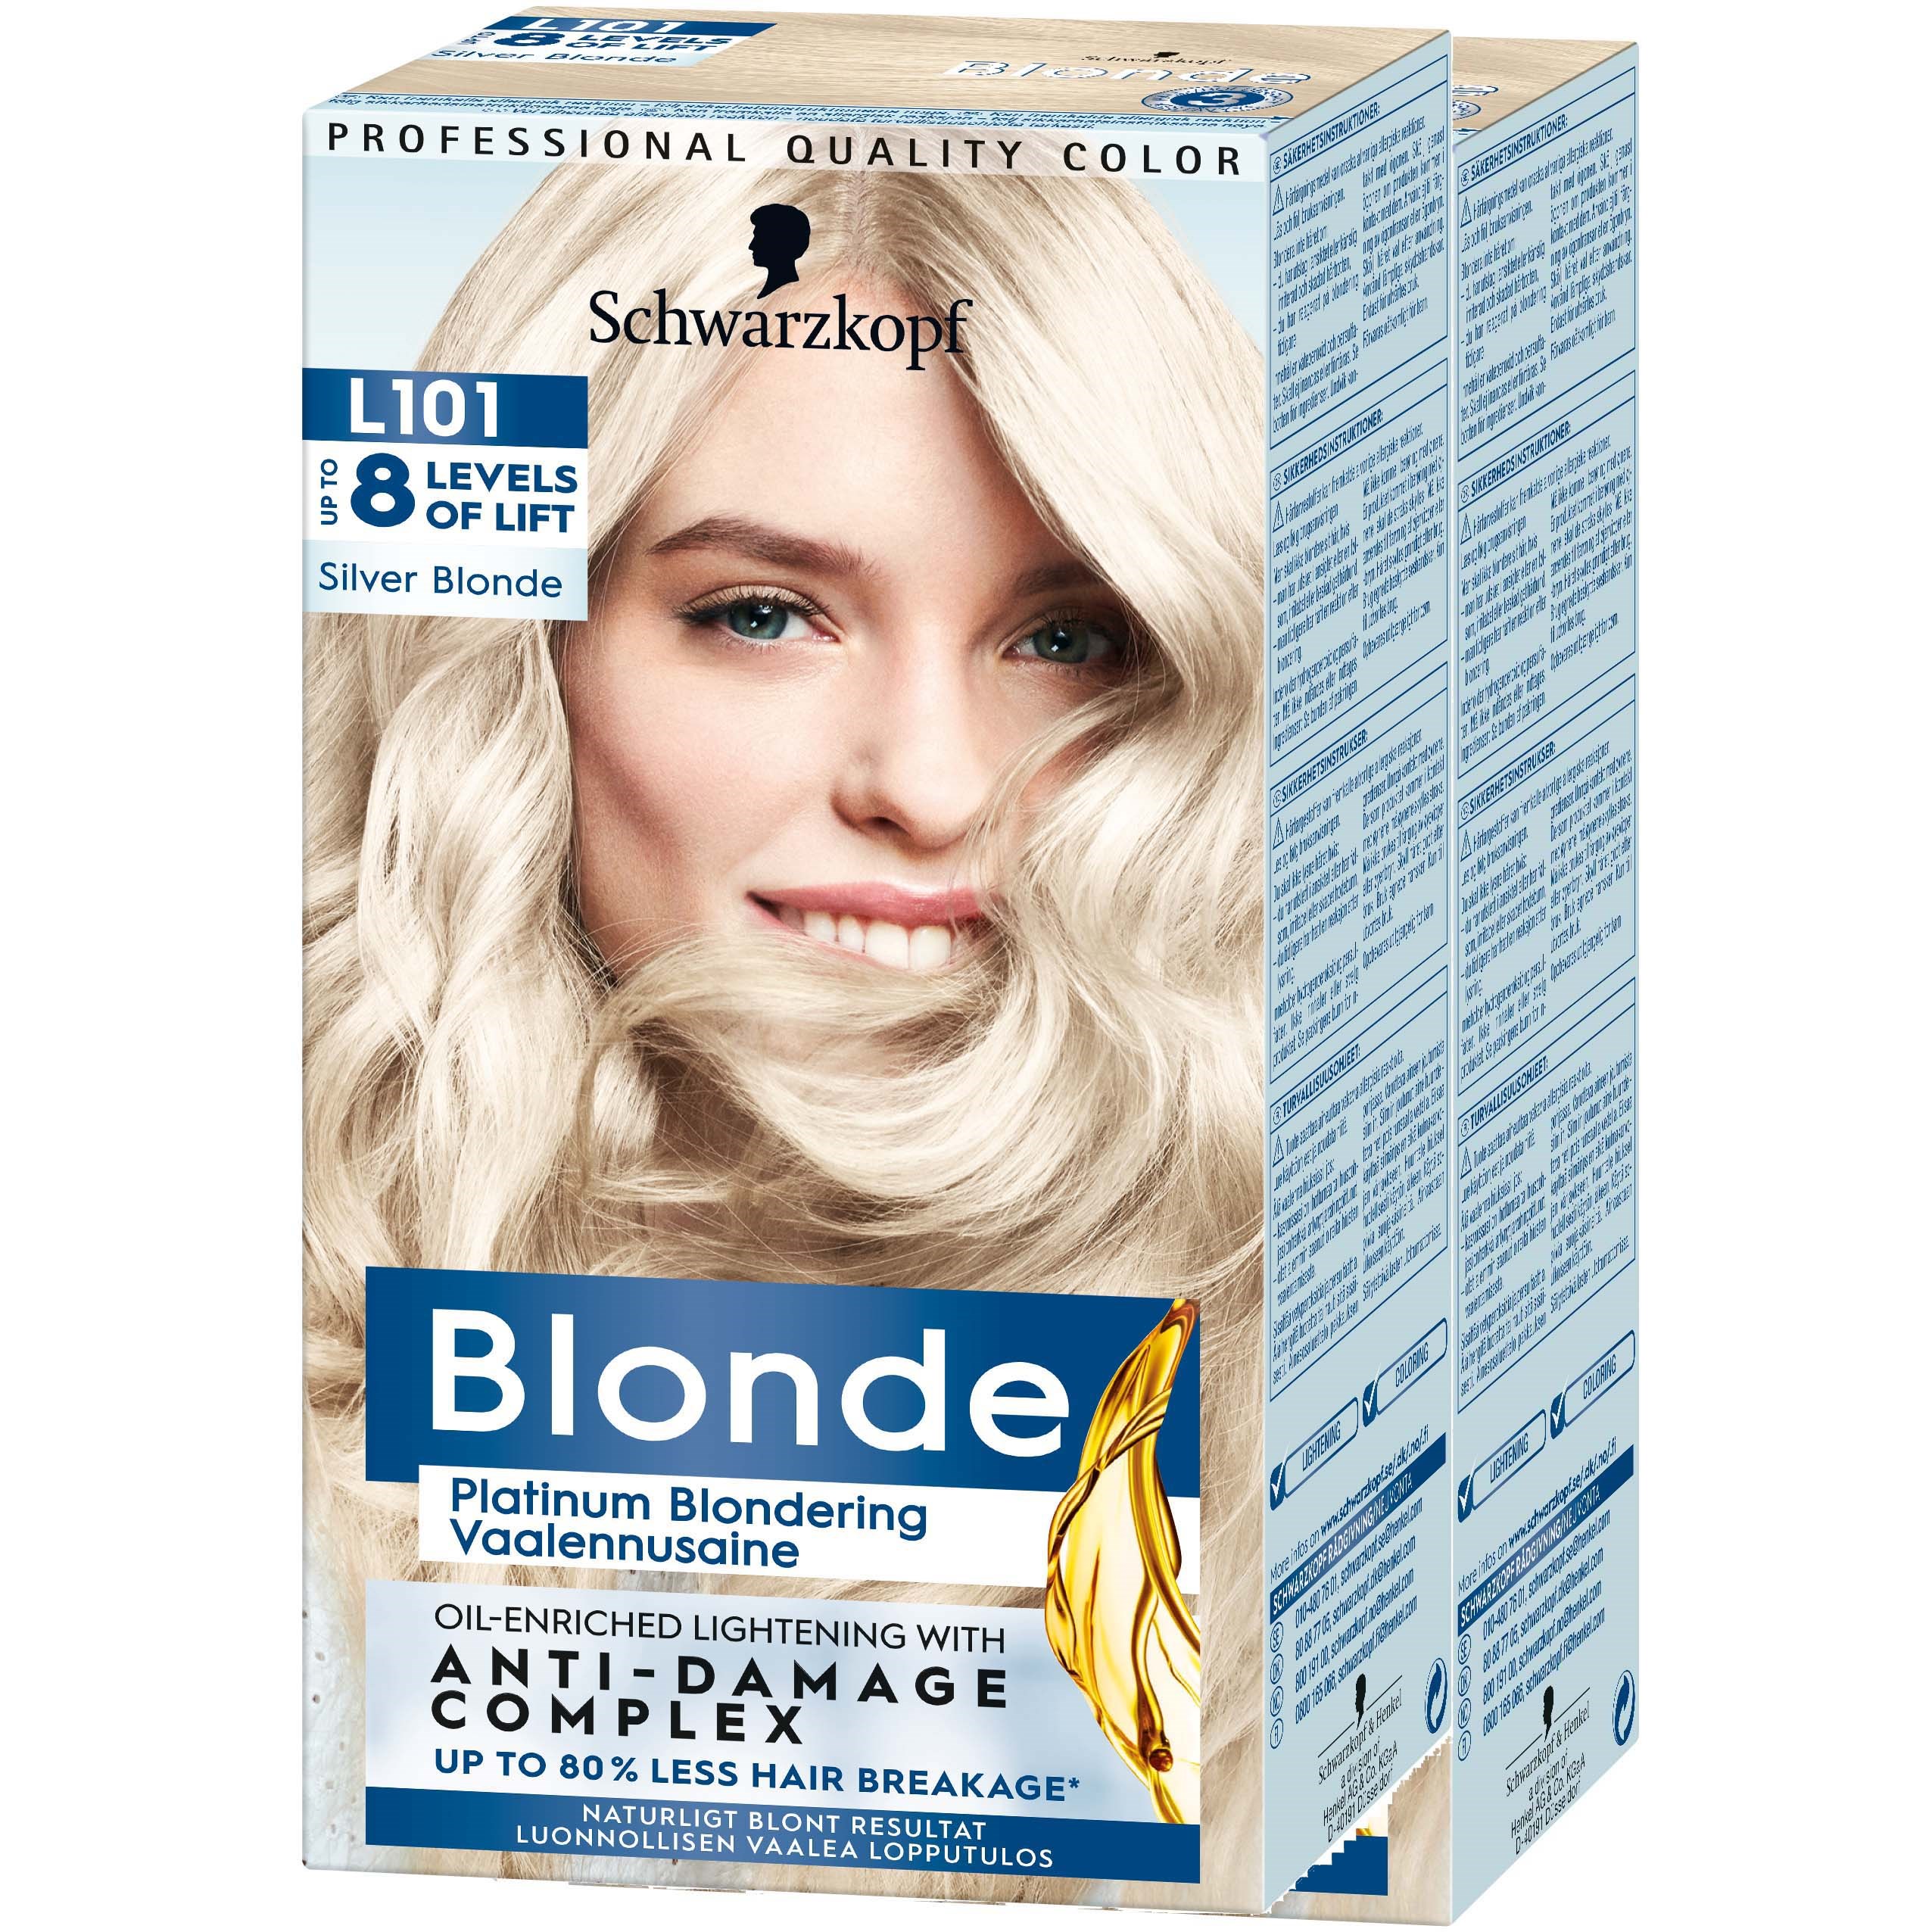 Läs mer om Schwarzkopf Blonde L101 Silver Blonde-2 pack